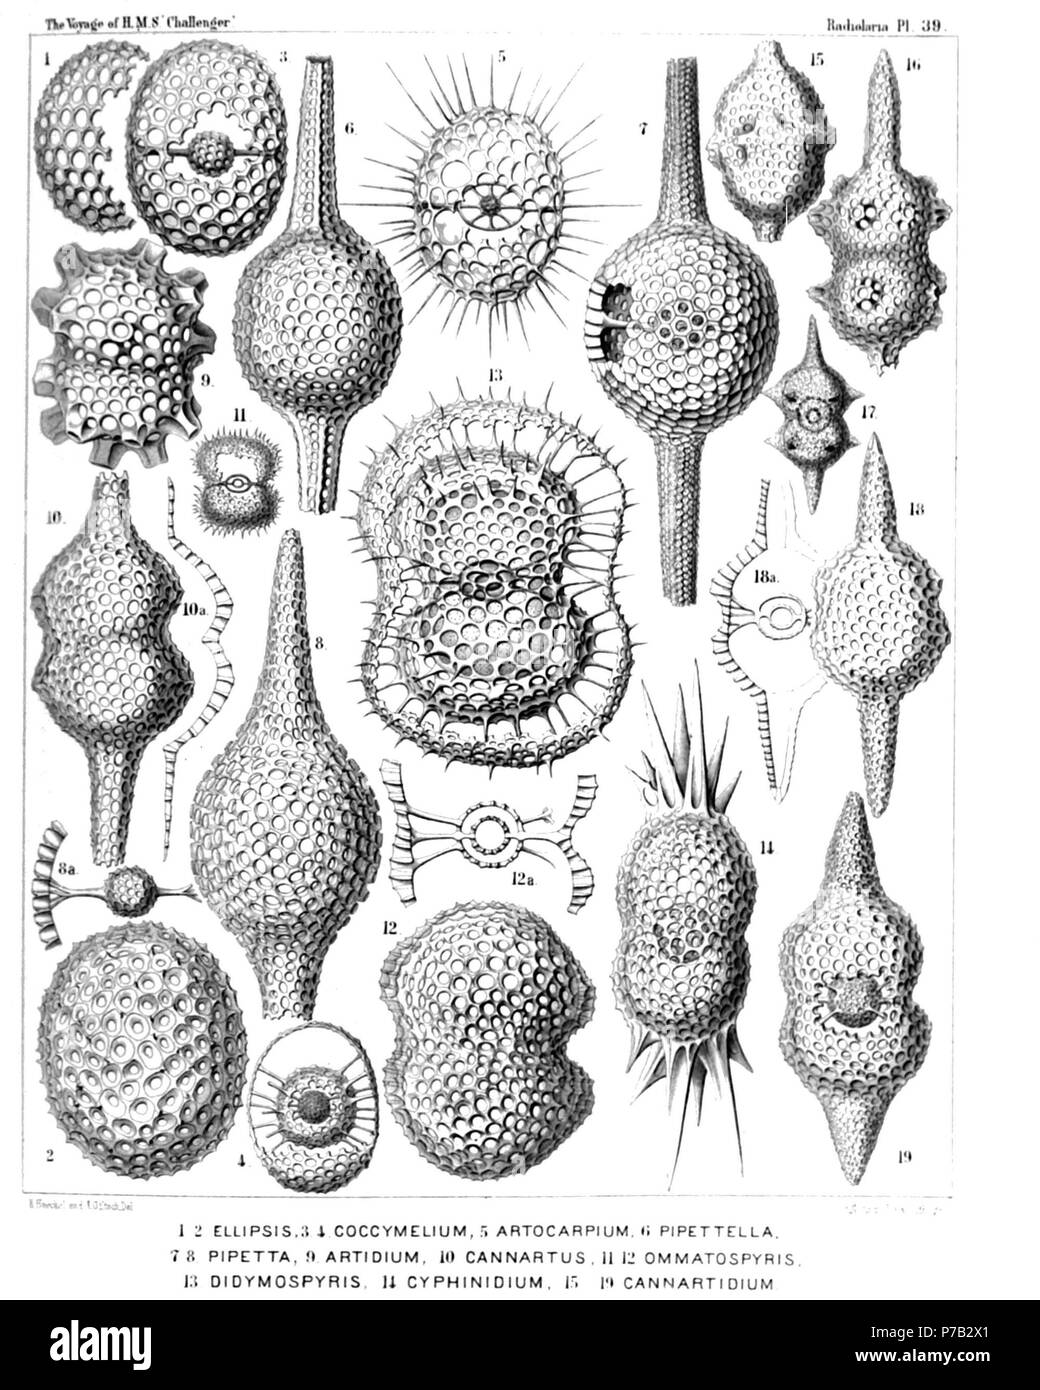 English: Illustration from Report on the Radiolaria collected by H.M.S. Challenger during the years 1873-1876. Part III. Original description follows:  Plate 39. Ellipsida, Druppulida, Artiscida et Cyphinida.  Diam.  Fig. 1. Cenellipsis faceta, n. sp. (vel Ellipsis faceta), × 300  Fig. 2. Cenellipsis infundibulum, n. sp. (vel Ellipsis infundibulum), × 300  Fig. 3. Druppula pandanus, n. sp. (vel Coccymelium pandanus), × 300  Fig. 4. Prunulum coccymelium, n. sp. (vel Coccymelium prunulum), × 300  Fig. 5. Prunocarpus artocarpium, n. sp. (vel Artocarpium indicum), × 300  Fig. 6. Pipettella prismat Stock Photo